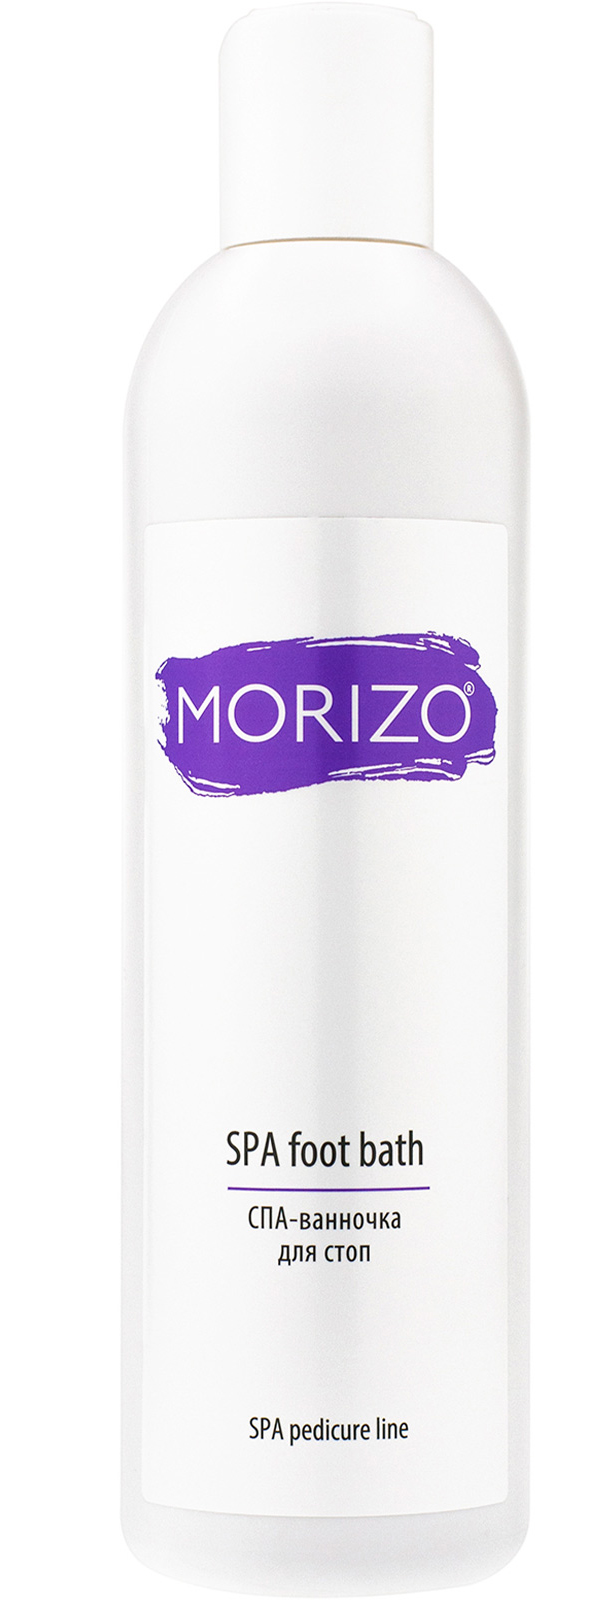 Morizo СПА - ванночка для стоп, 300 мл (Morizo, Manicure line) от Socolor